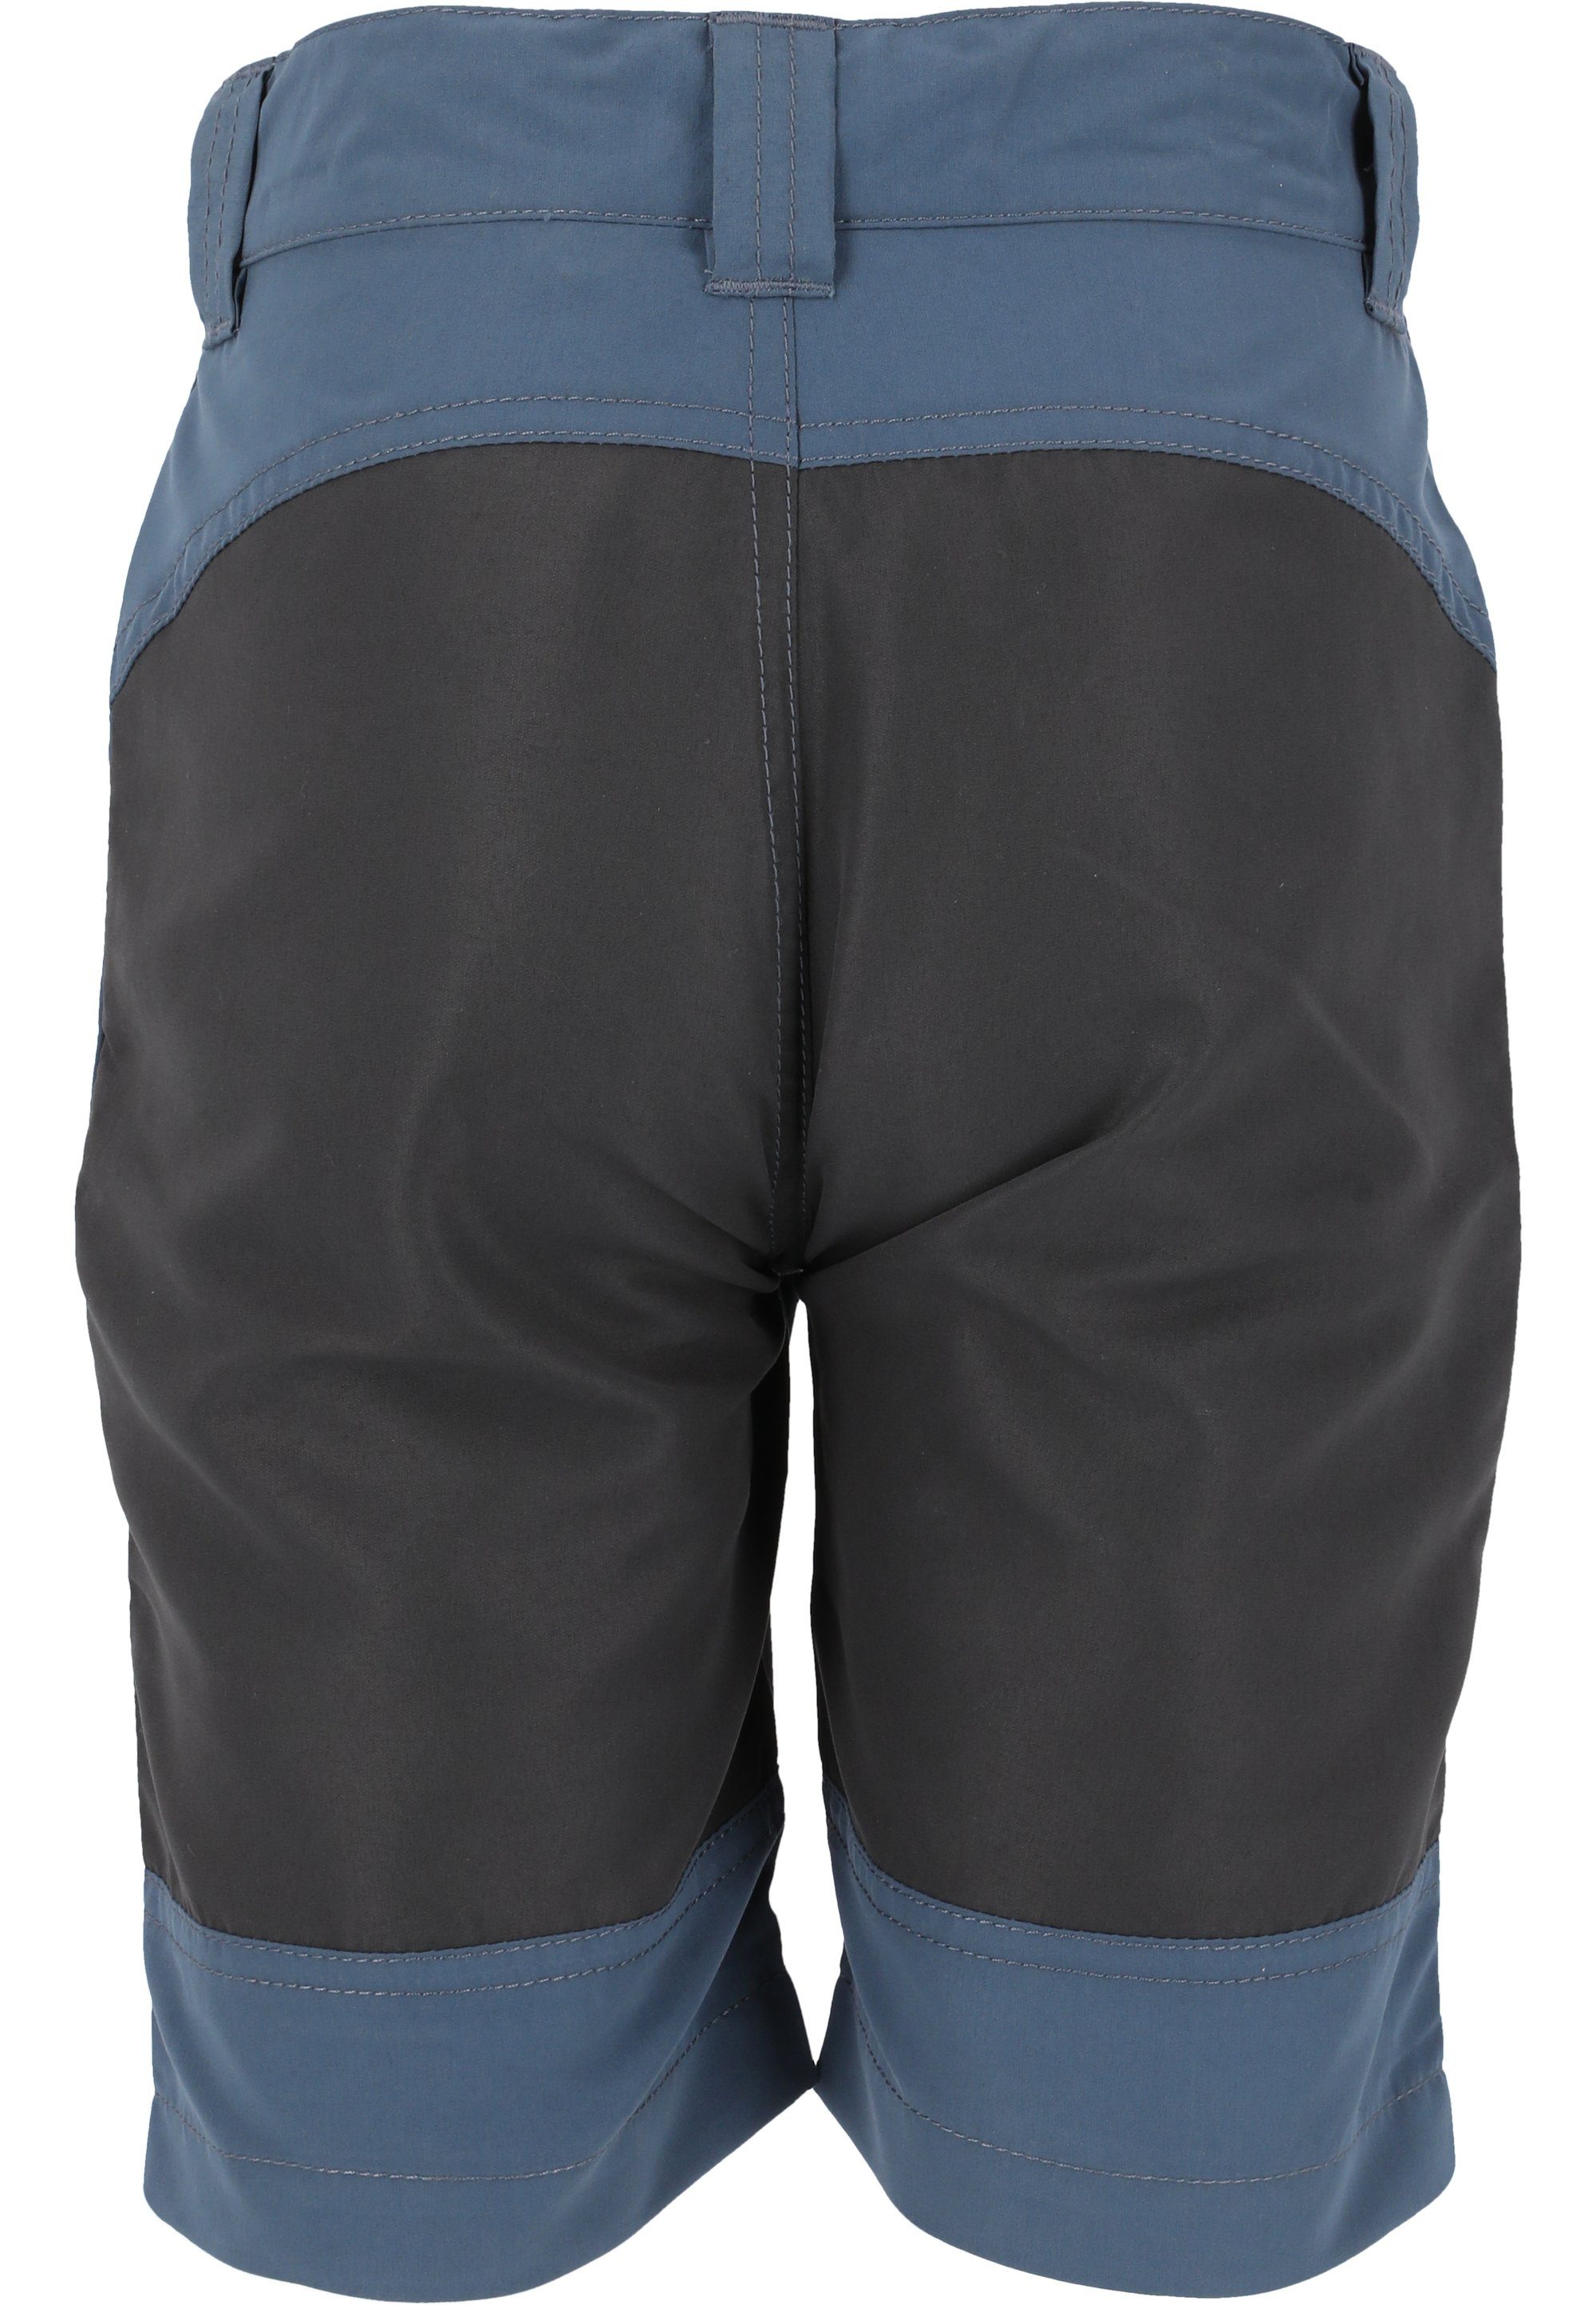 ZIGZAG aus Material Shorts robustem blau-schwarz Atlantic